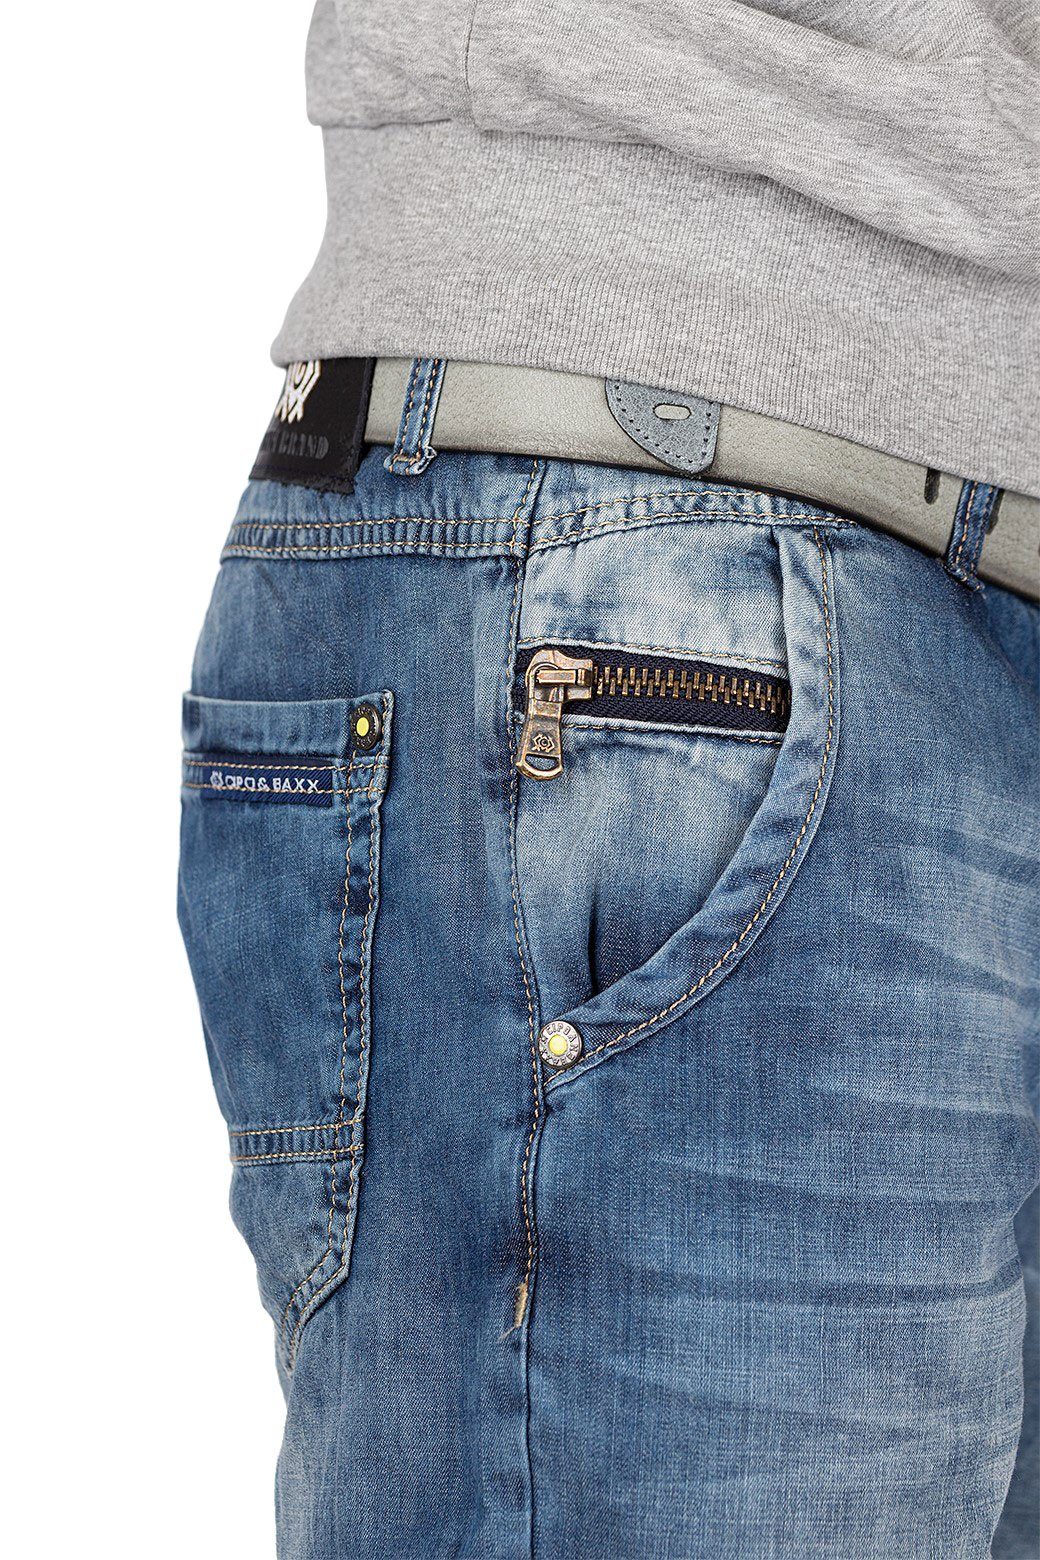 Cipo & Baxx Jeansshorts Kurze Style mit BA-CK217 im Hose Casual Zipper